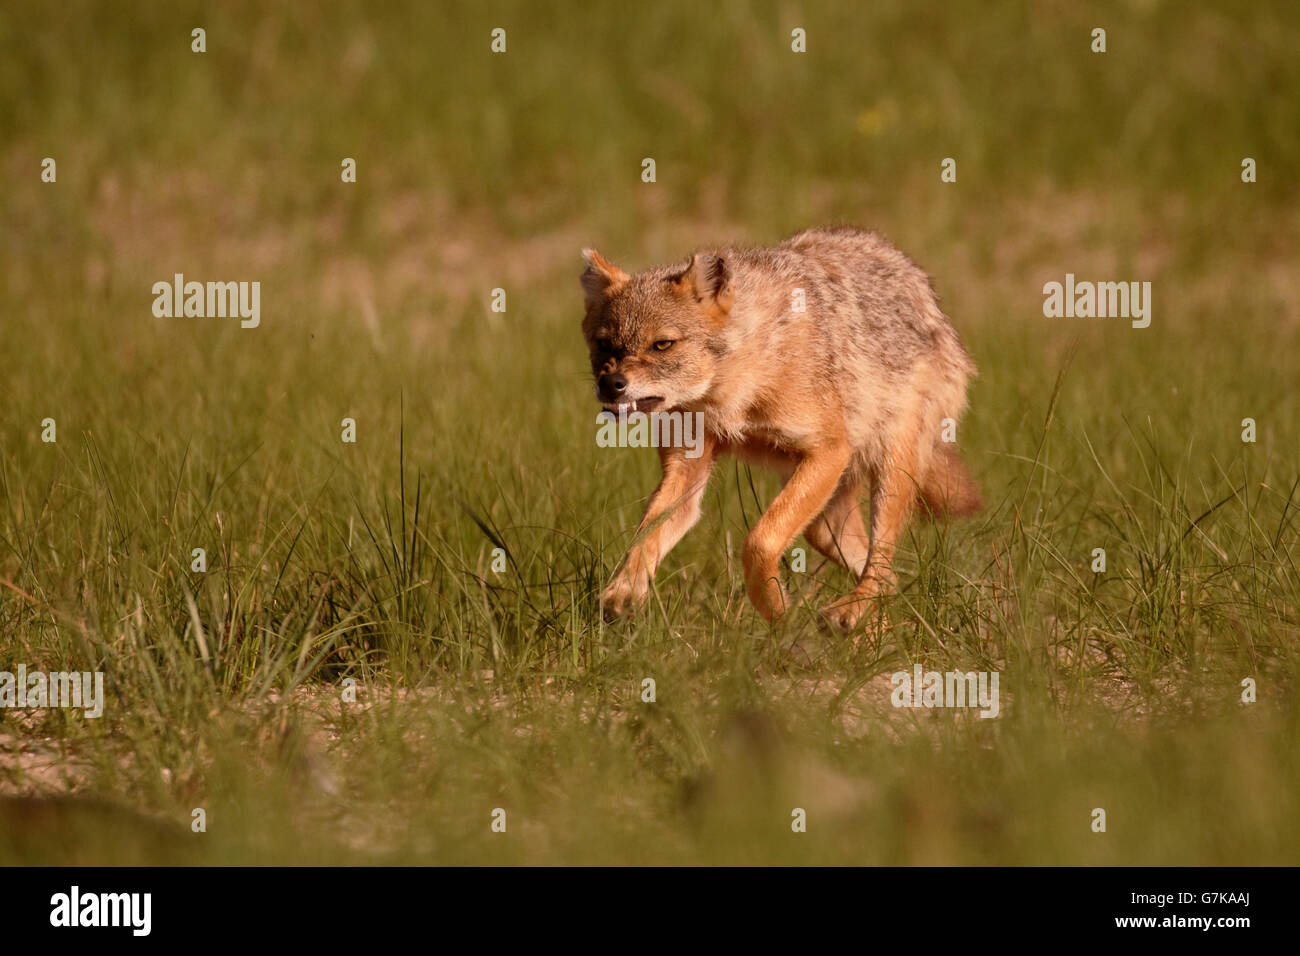 Jackal europea, Canis aureus moreoticus, unico mammifero su erba, Romania, Giugno 2016 Foto Stock